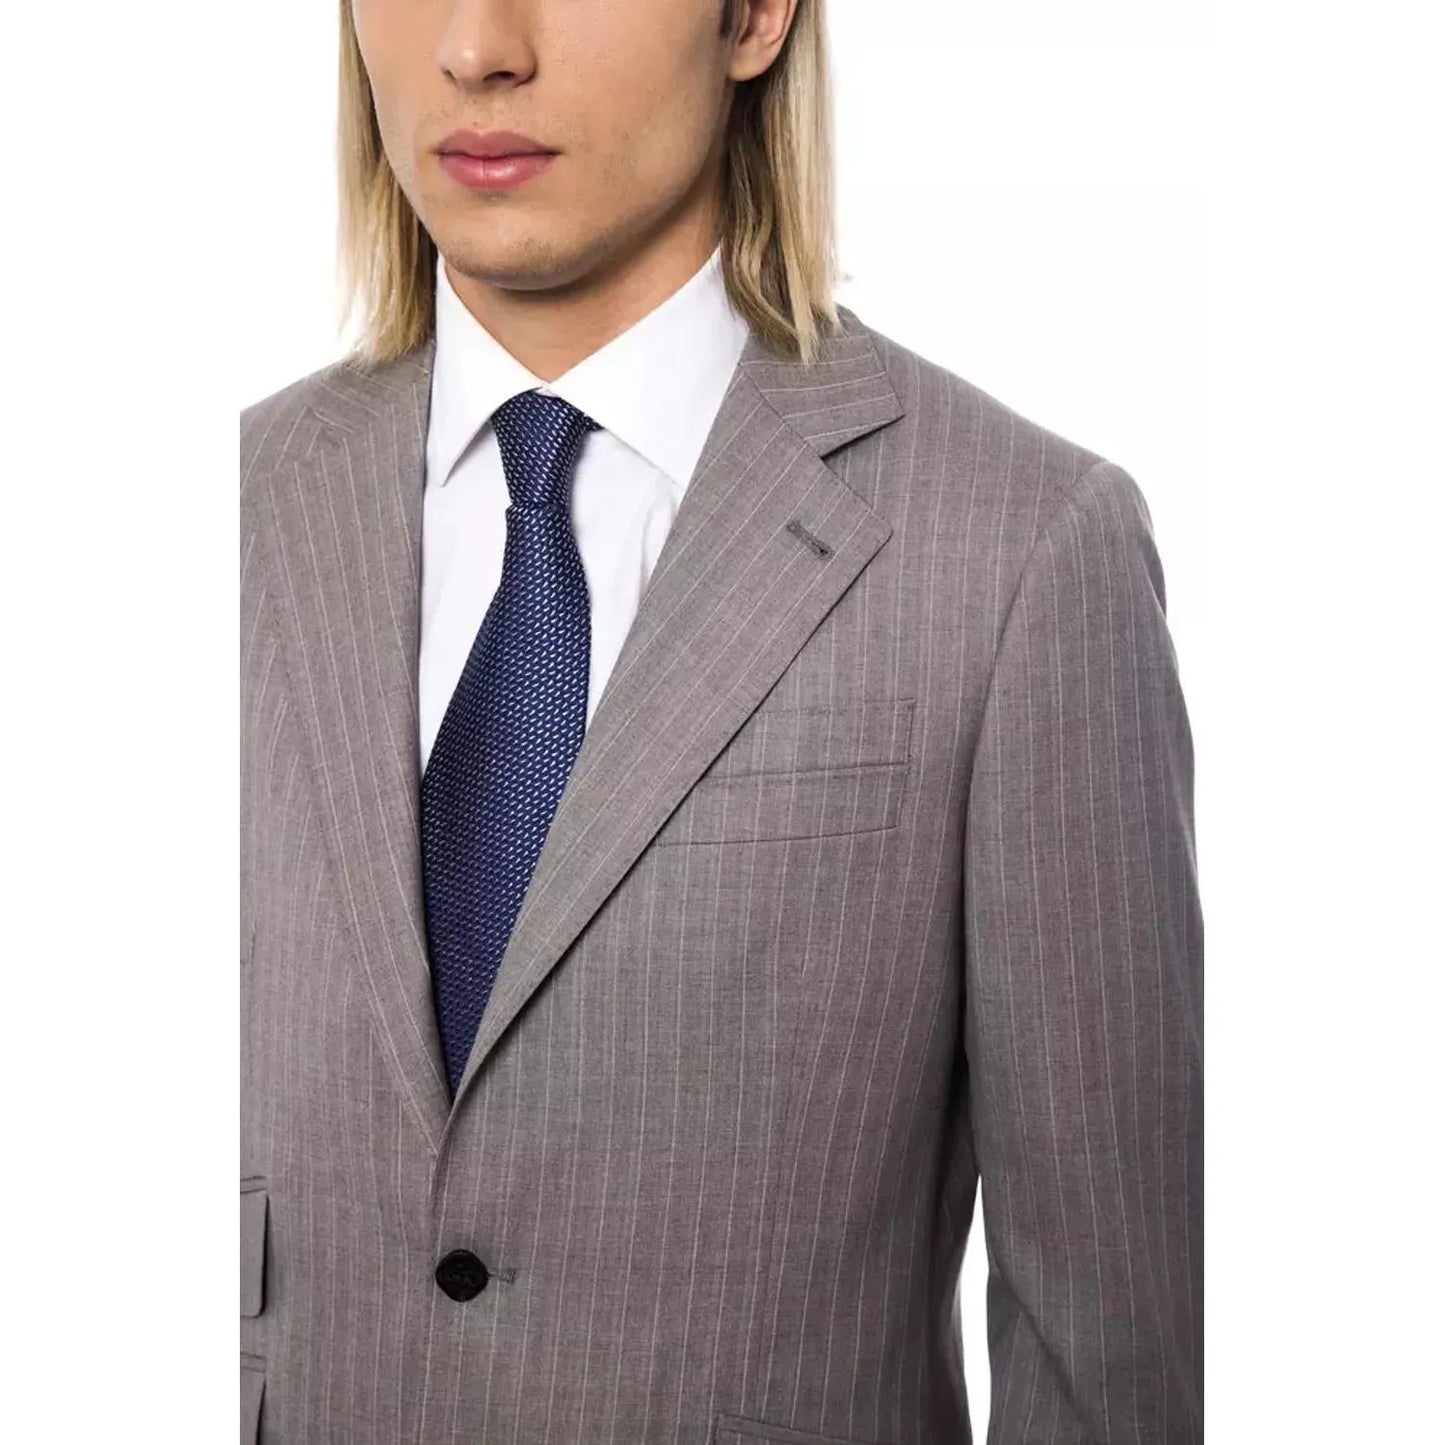 Billionaire Italian Couture Elegant Gray Italian Wool Suit grich-lt-grey-suit stock_product_image_10385_394139040-16-77e6f1c1-1c5.webp